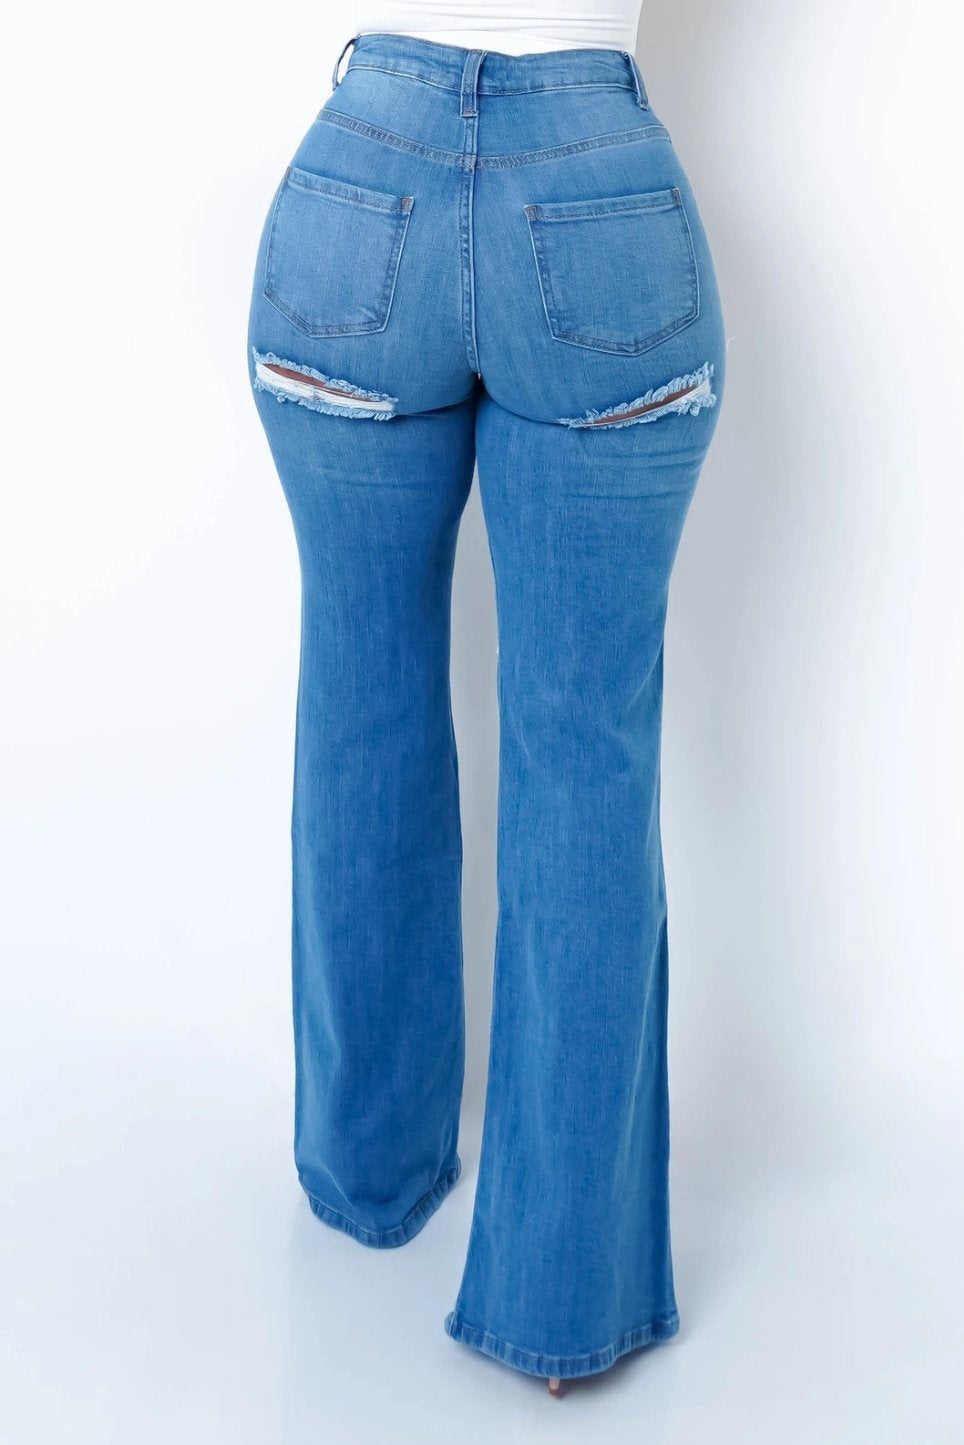 New style elastic ripped flared pants jeans women - Carvan Mart Ltd